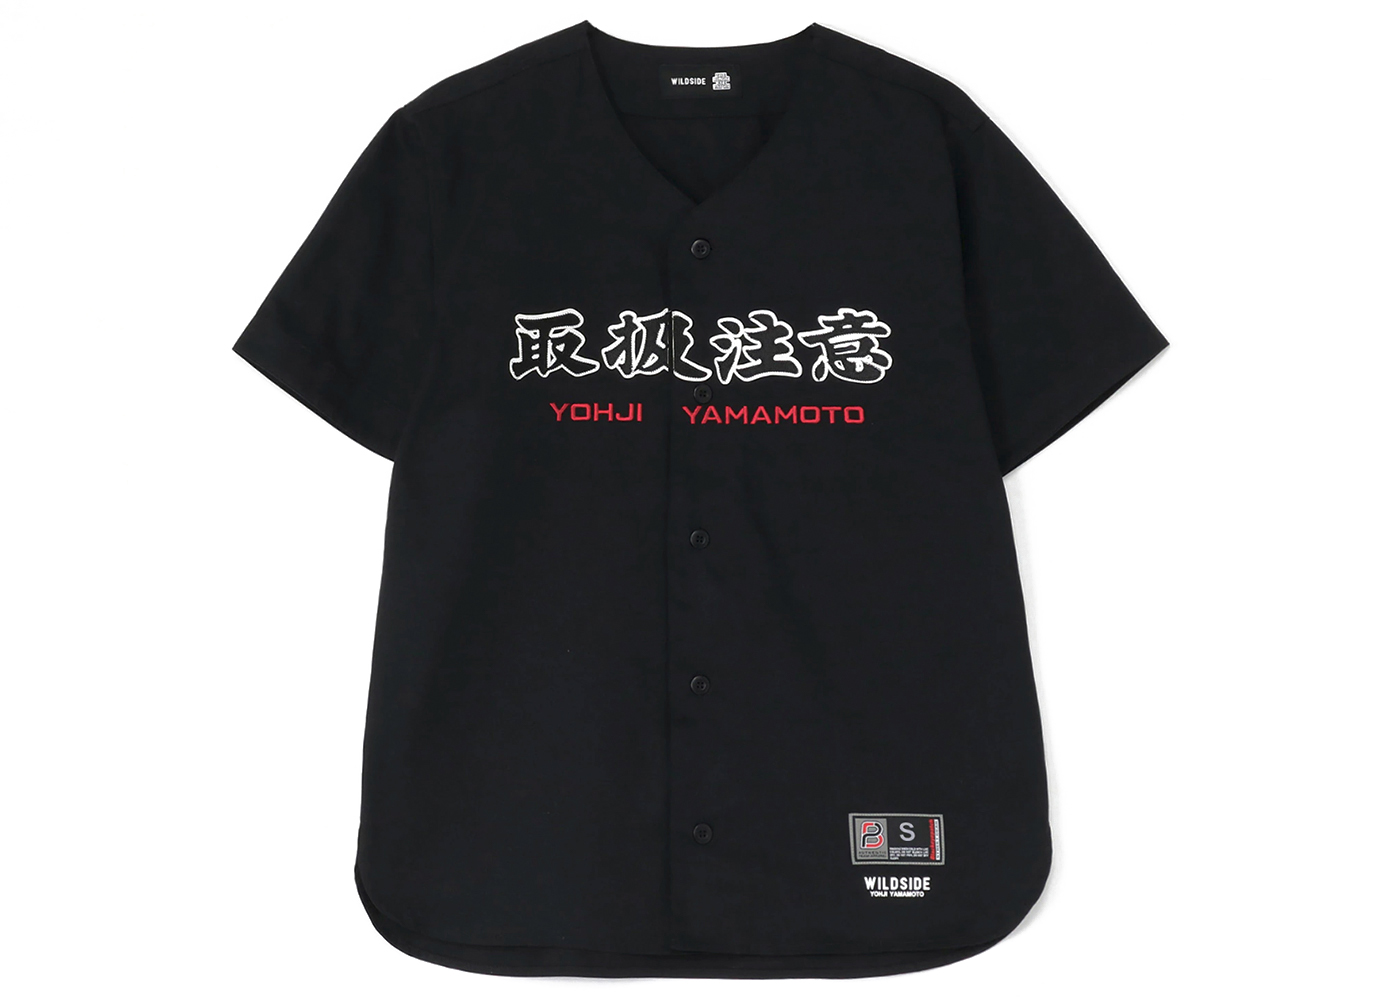 BlackEyePatch x Wildside Yohji Yamamoto Baseball Shirt Black